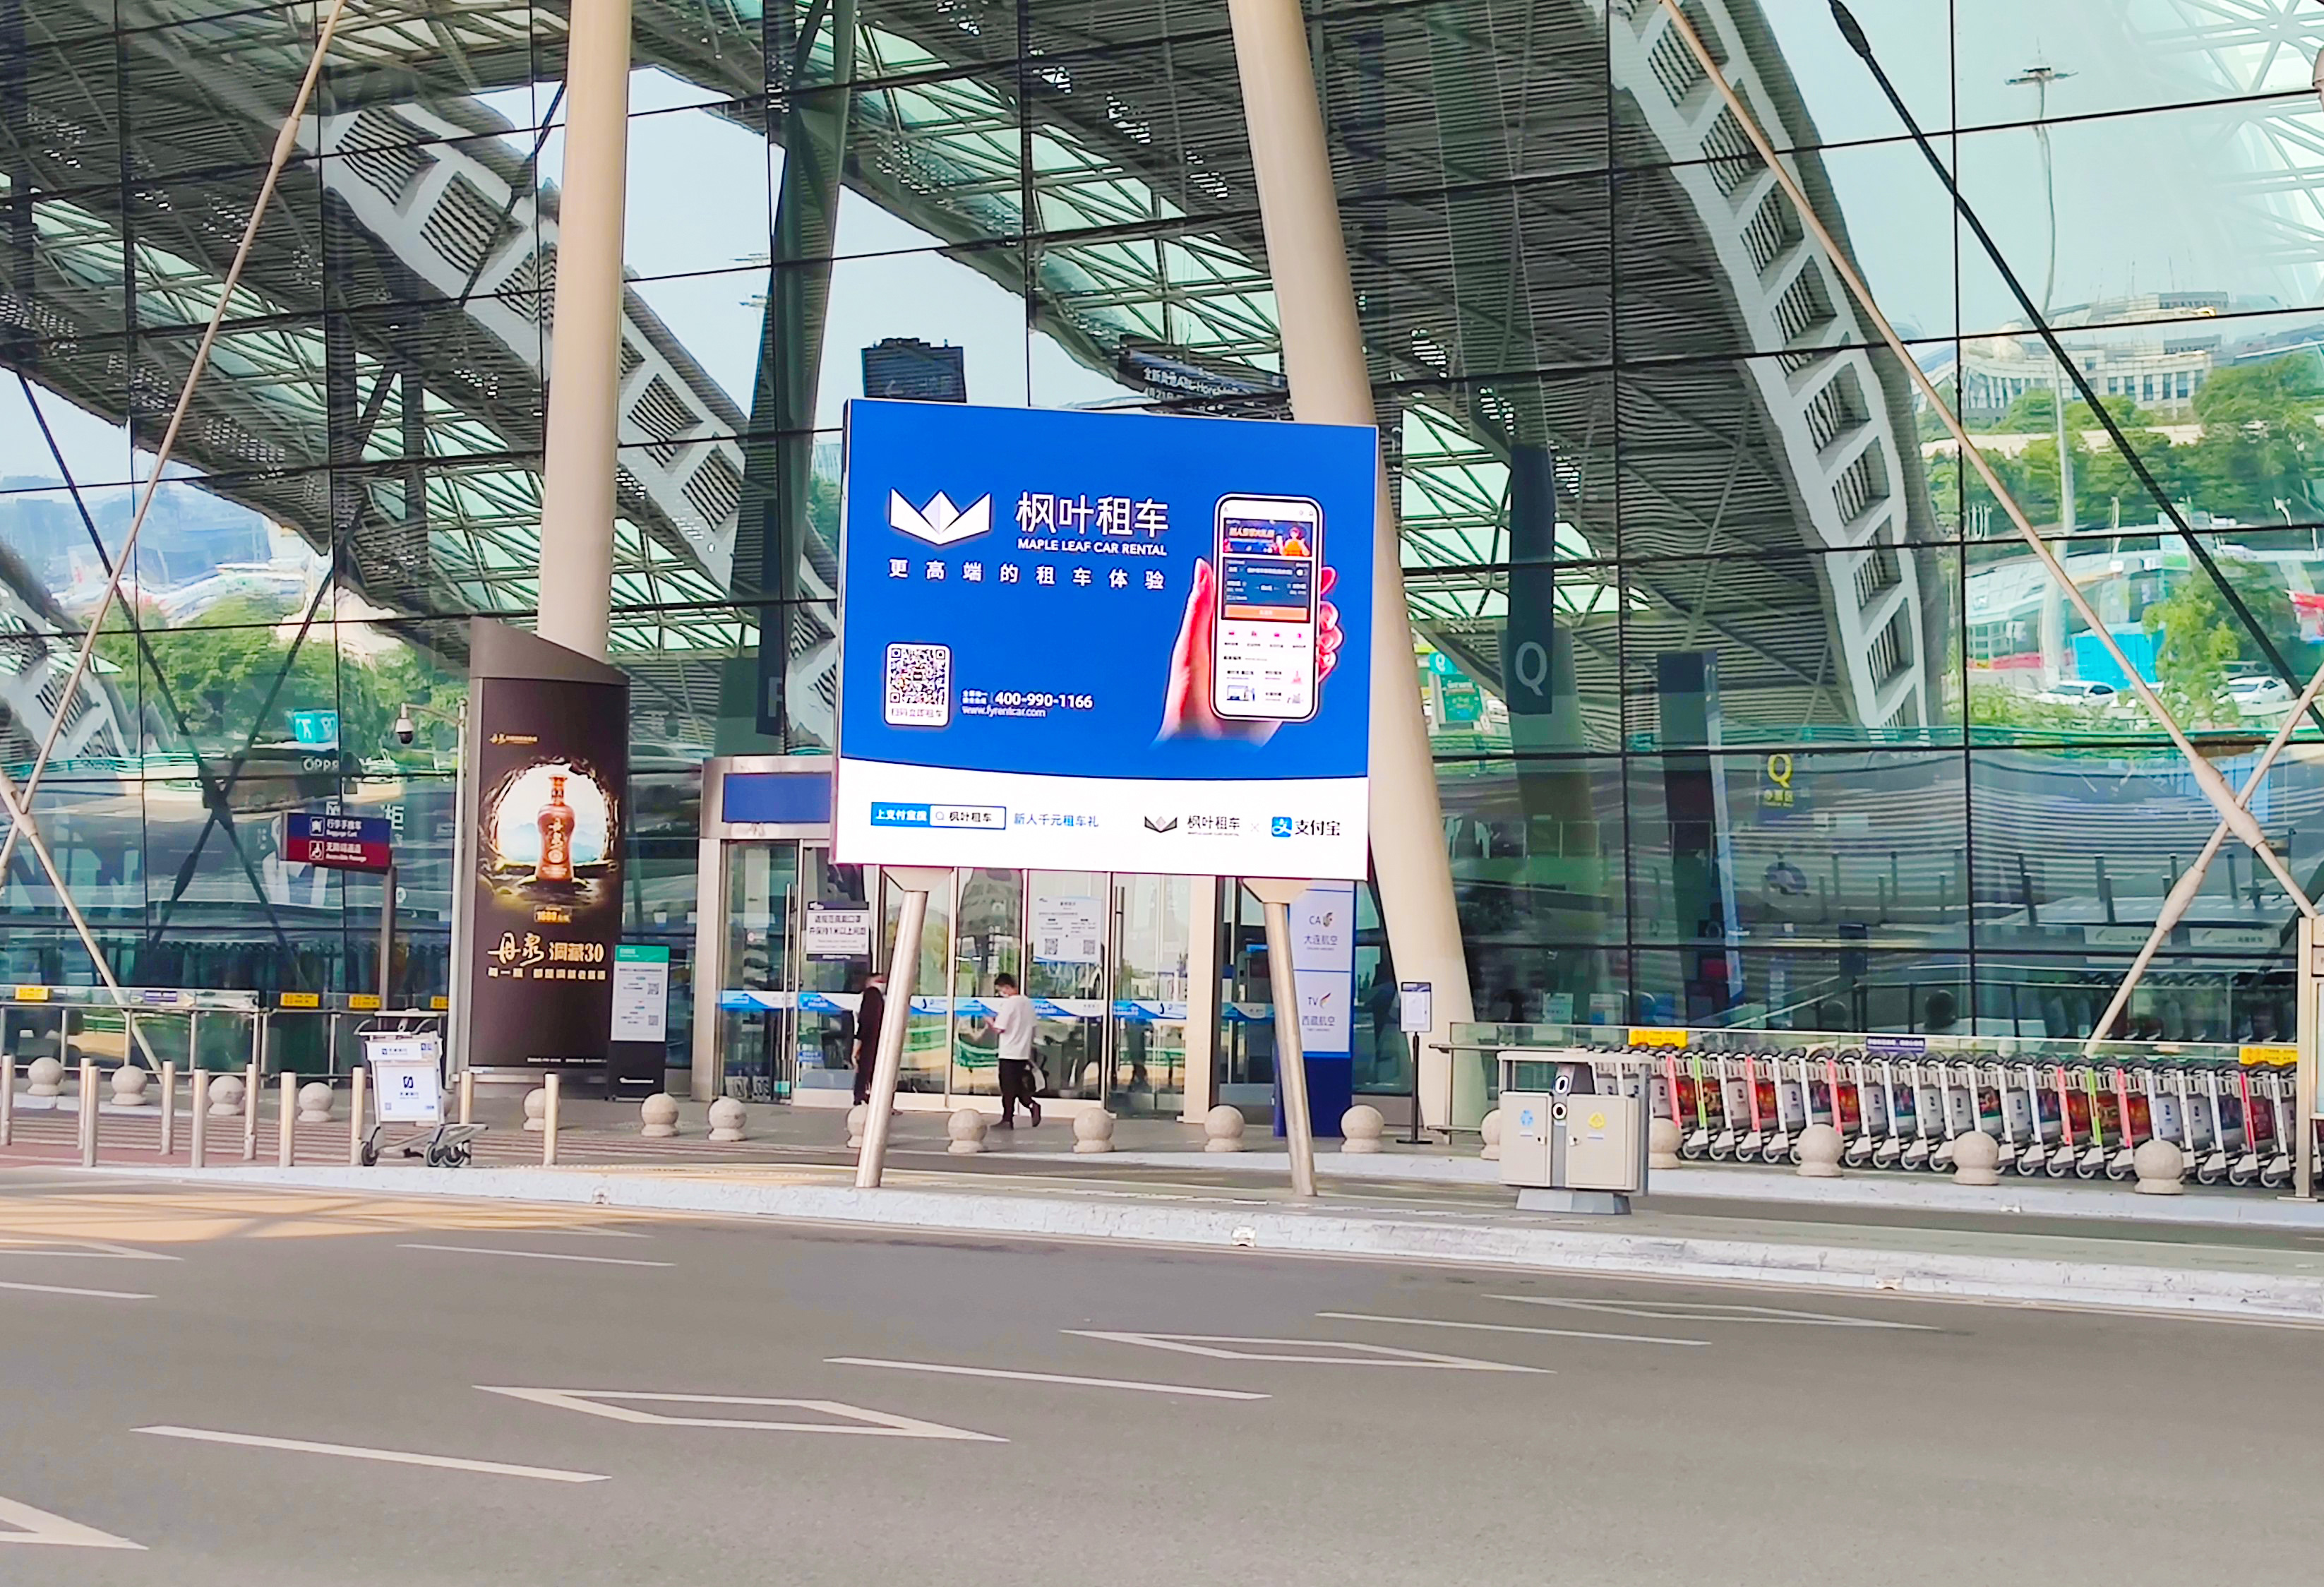 Brand-new LED billboards outside the T2 terminal of Chengdu Shuangliu International Airport